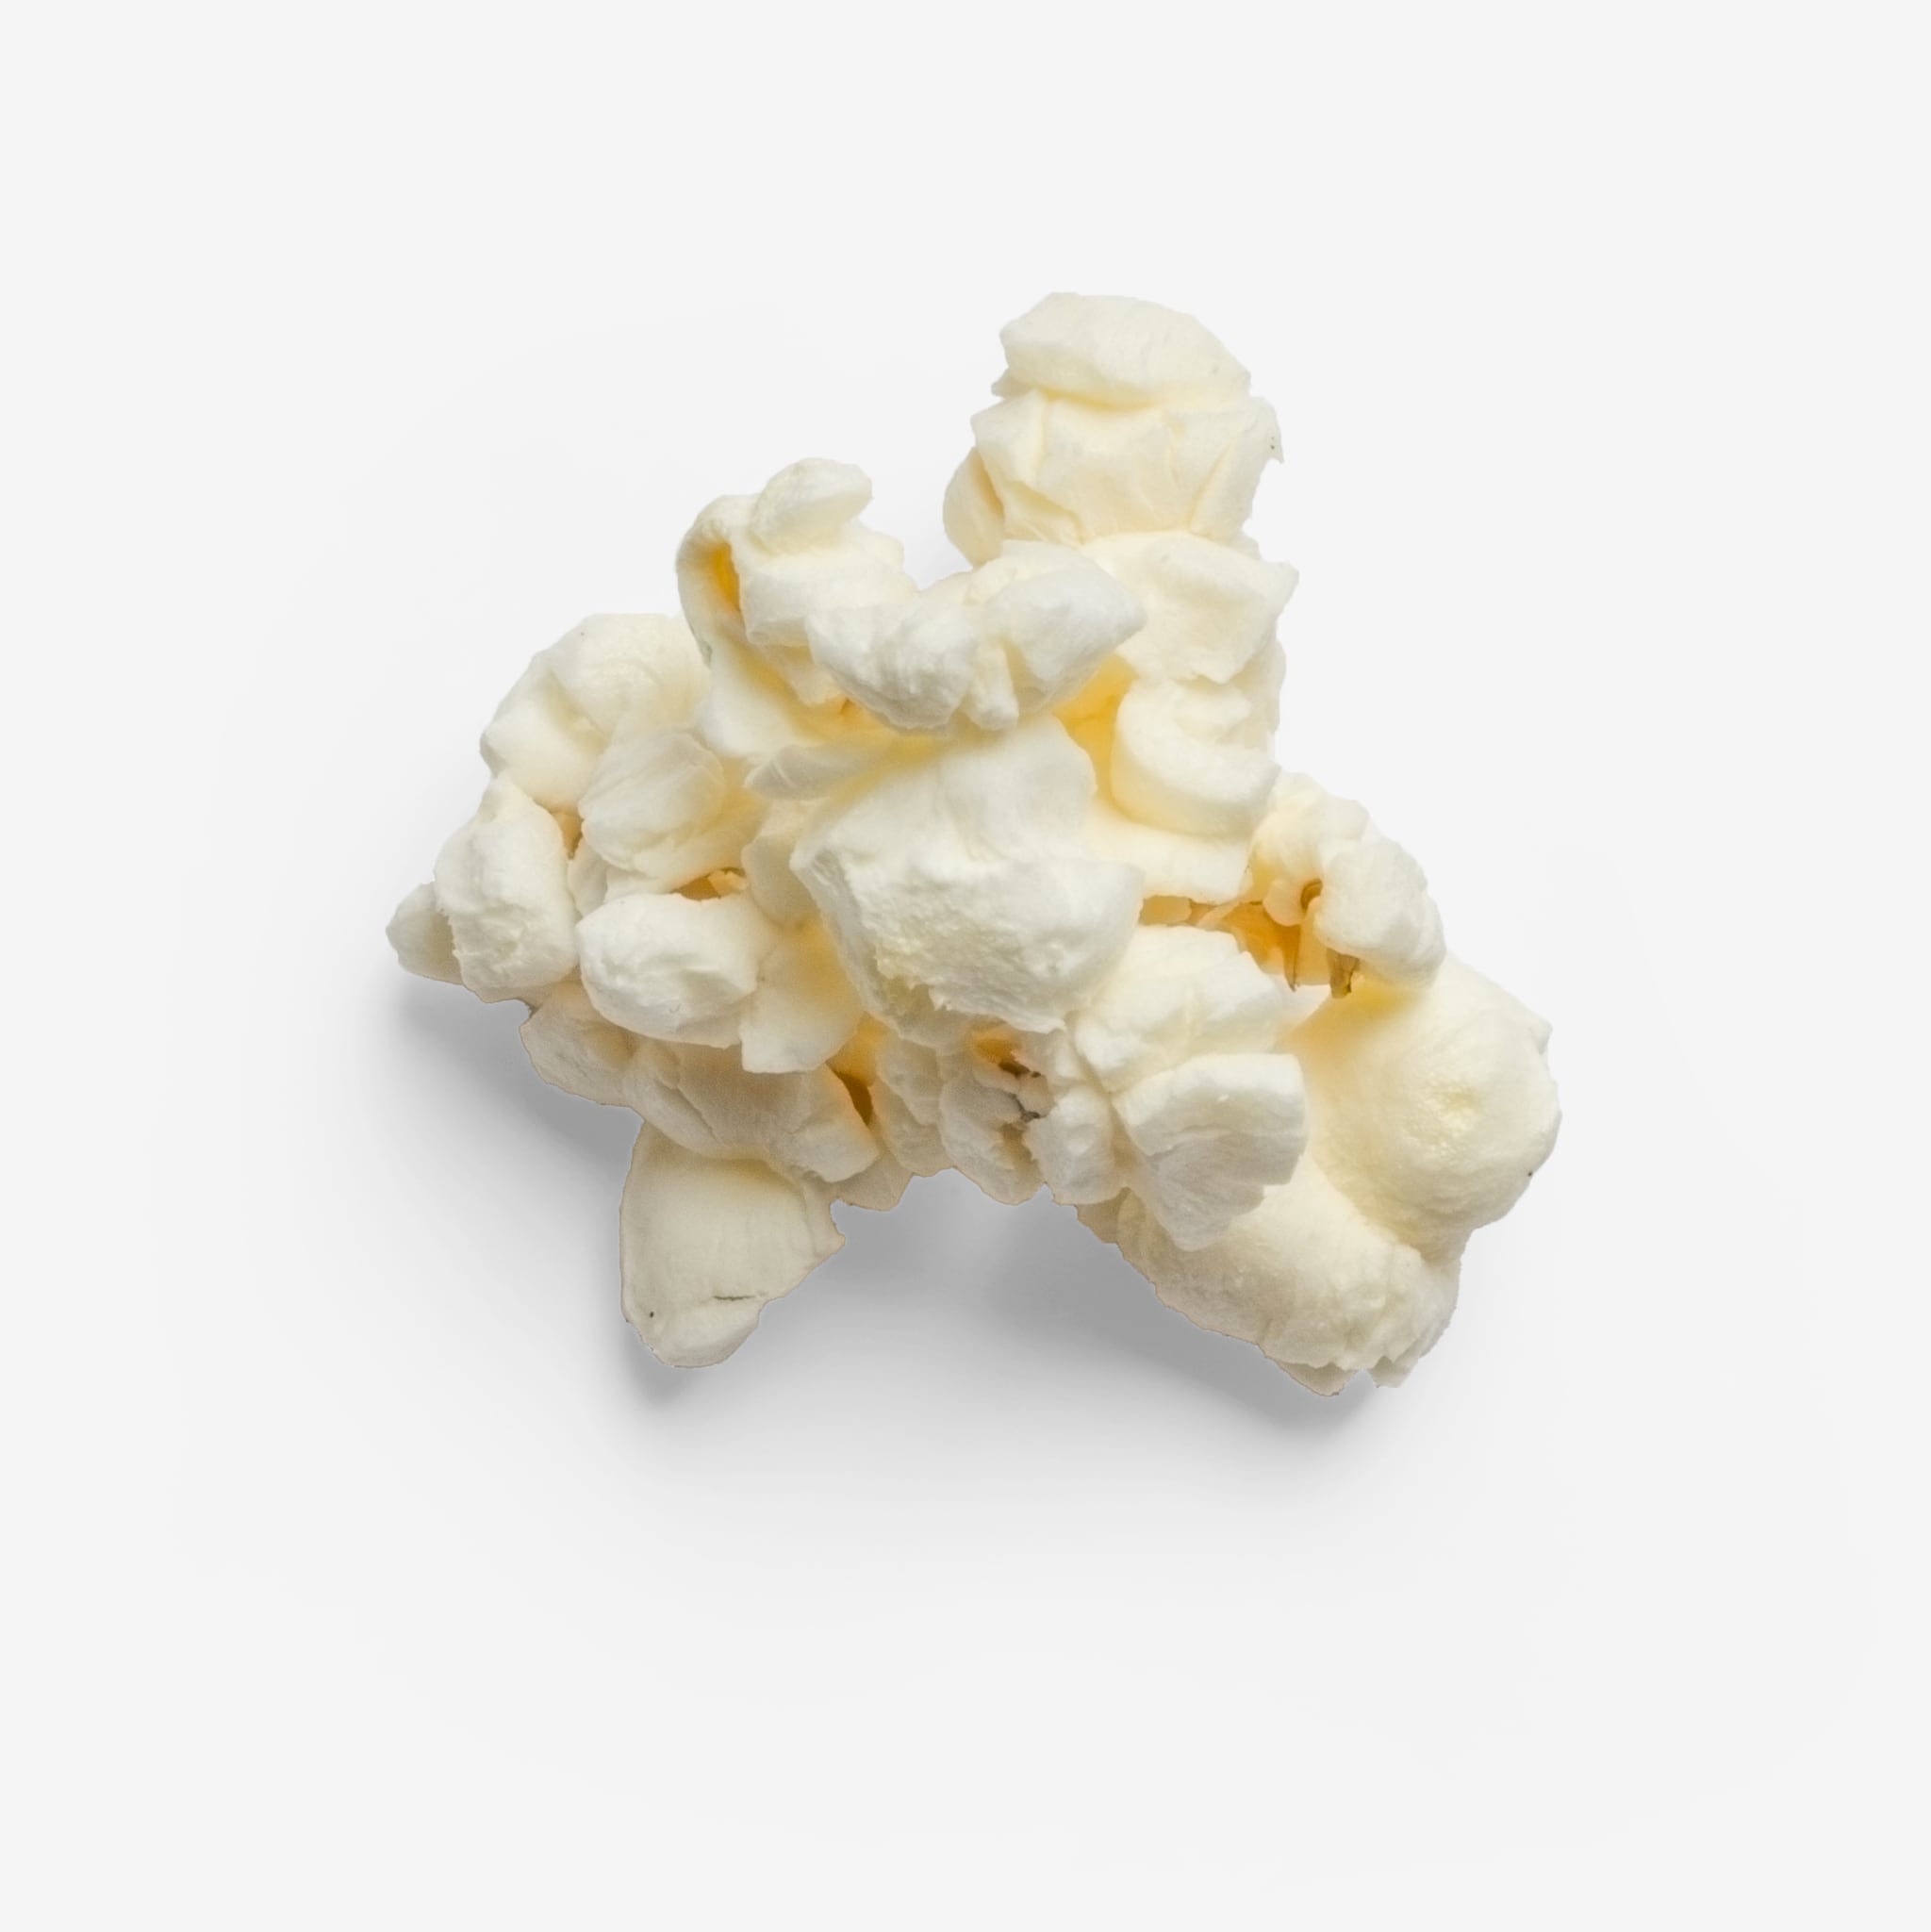 Popcorn image with transparent background